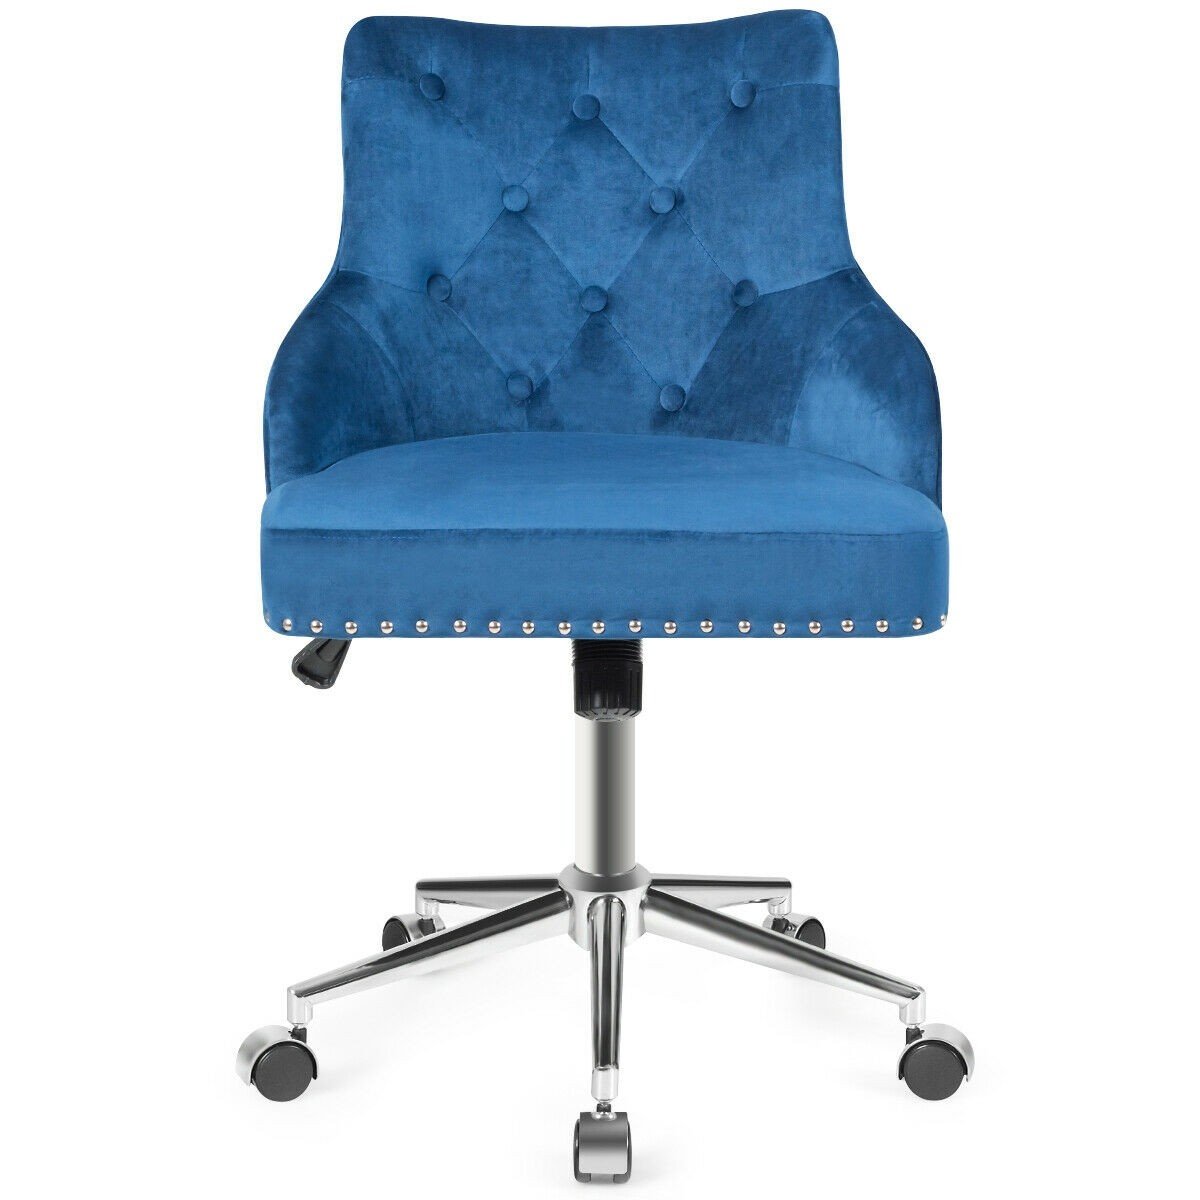 Giantex Modern Home Office Chair, Adjustable Task Chair Computer Desk Chair